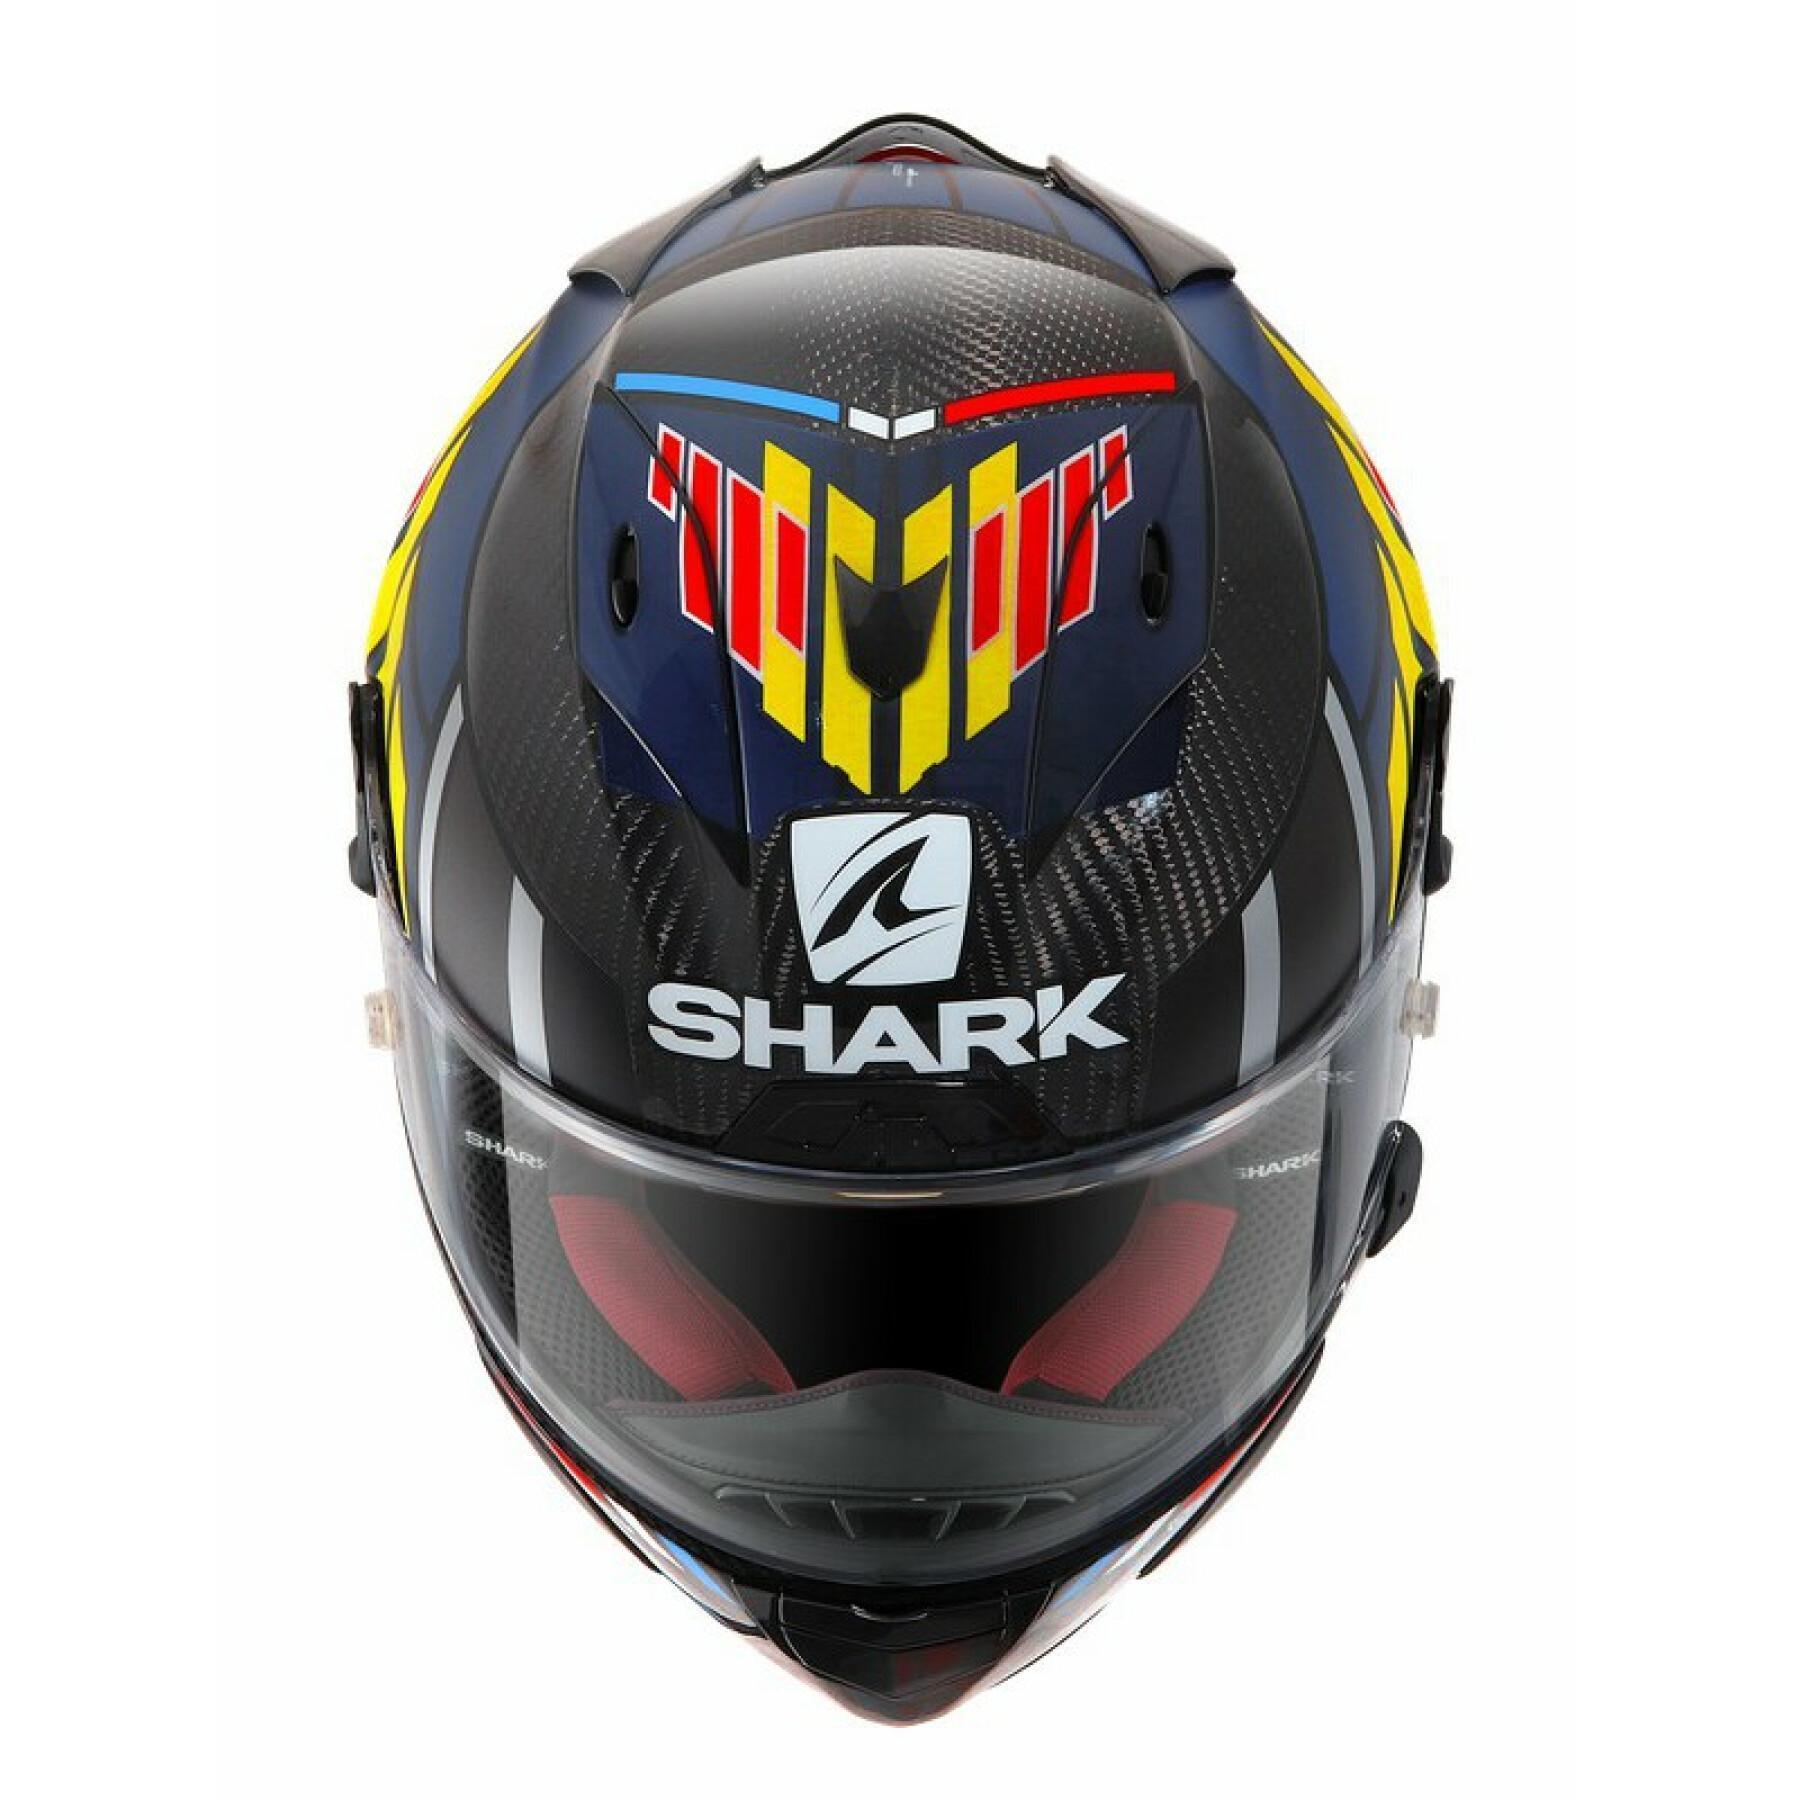 Full face motorcycle helmet Shark race-r pro carbon zarco speedblock